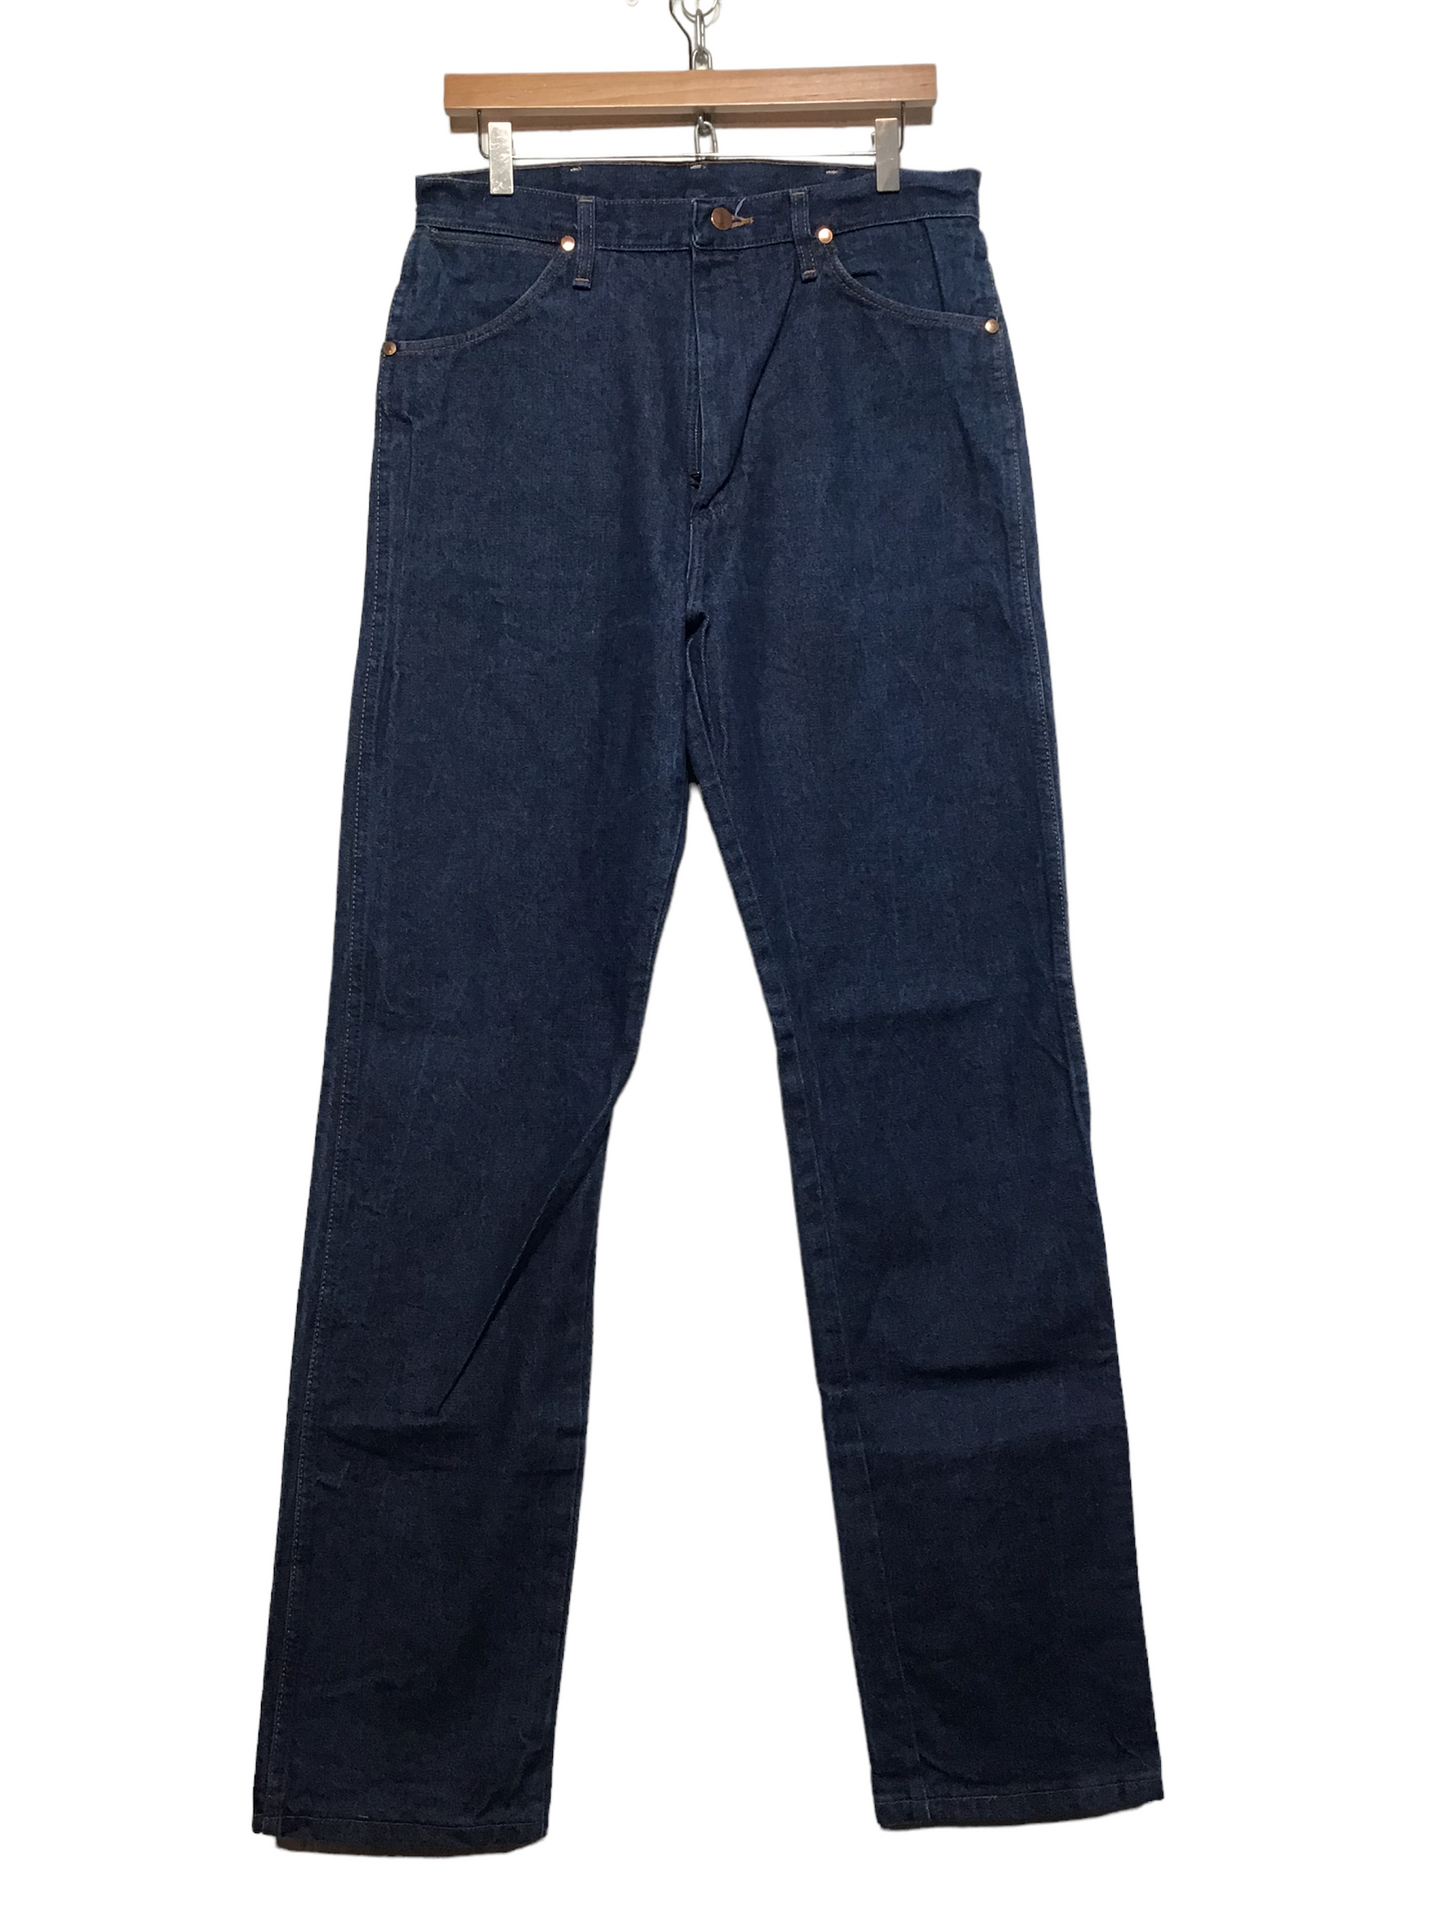 Wrangler Jeans (33X35)